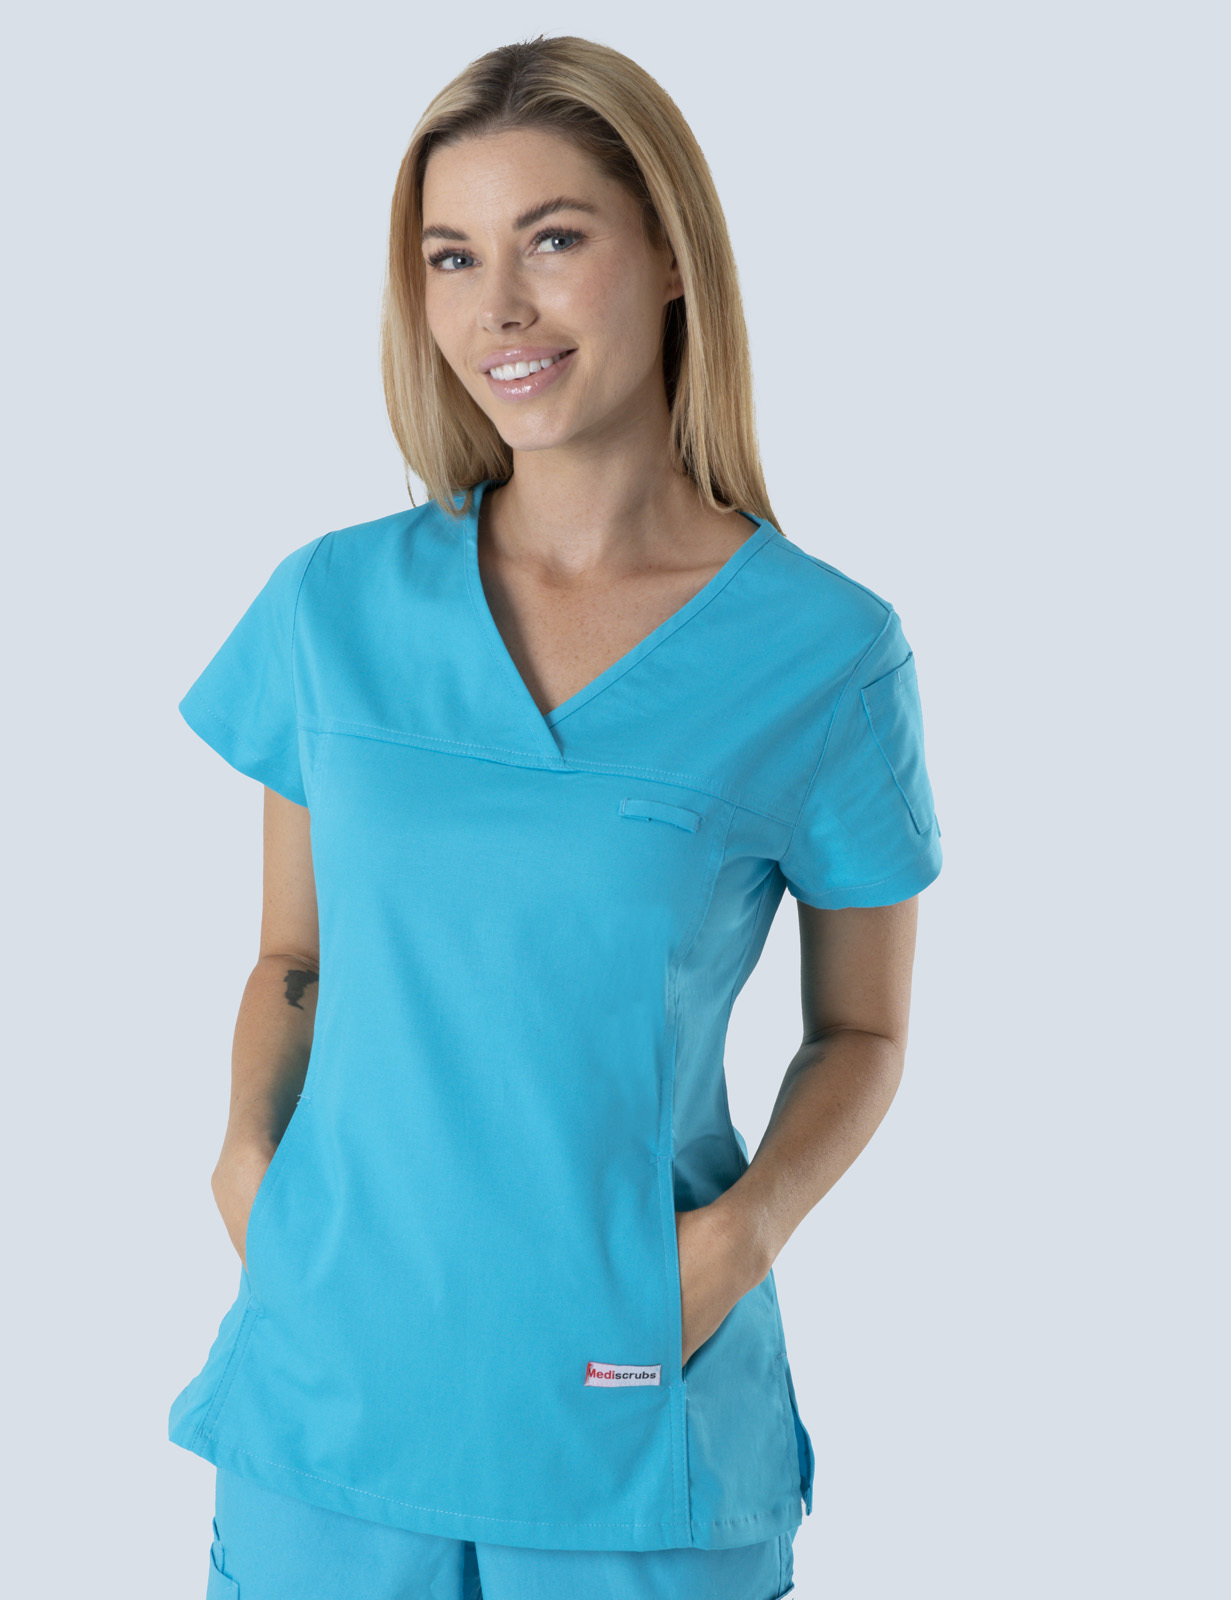 Queensland Children's Hospital Emergency Department Clinical Nurse  Uniform Top Bundle  (Women's Fit Top in Aqua  incl Logos)